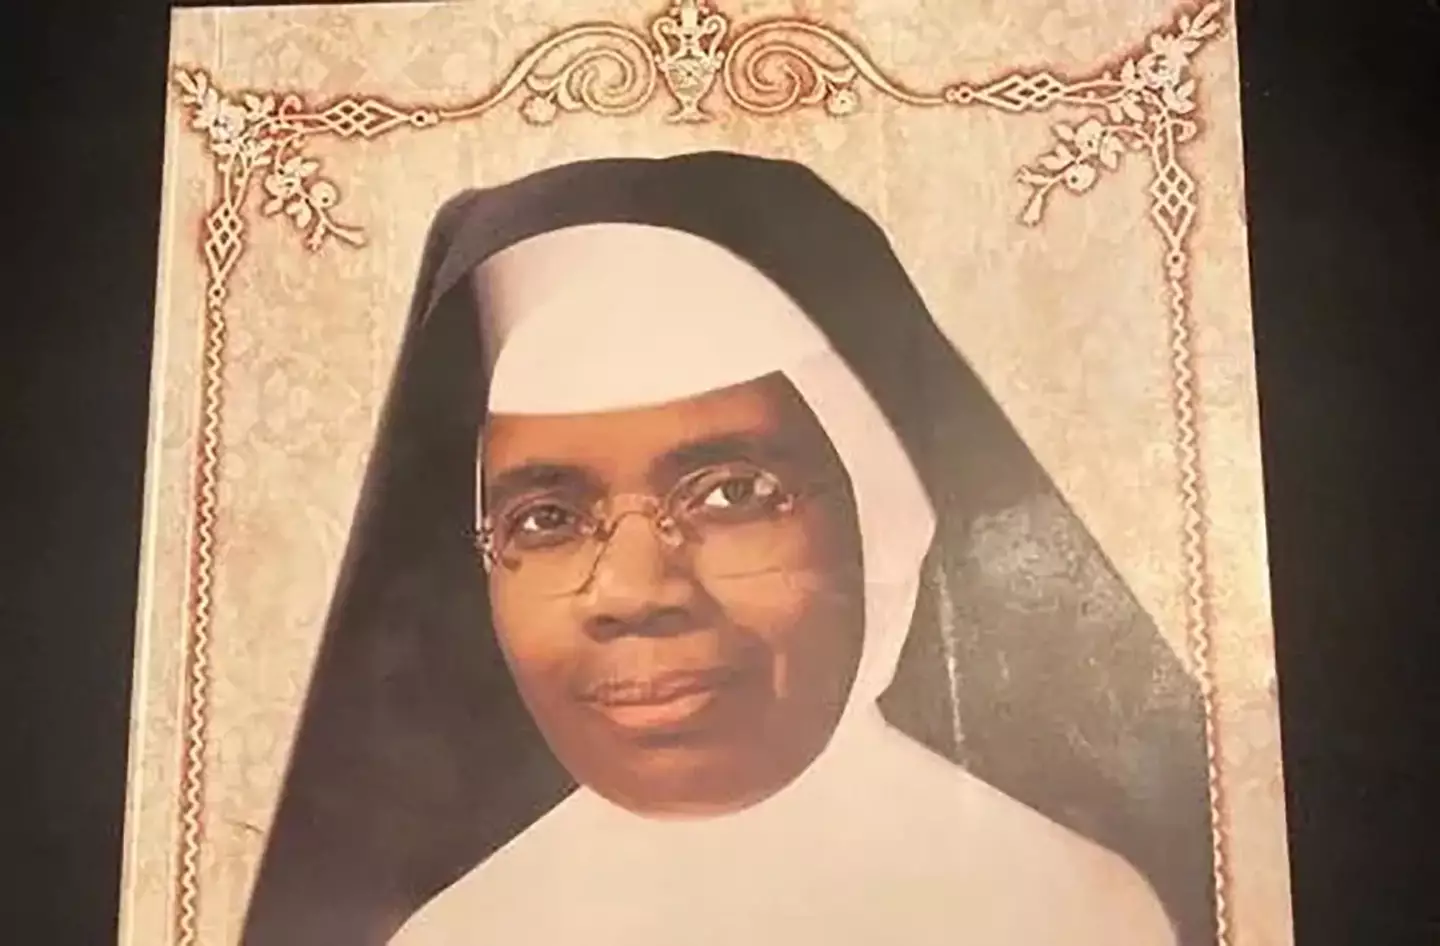 Sister Wilhelmina Lancaster died in 2019 aged 95.